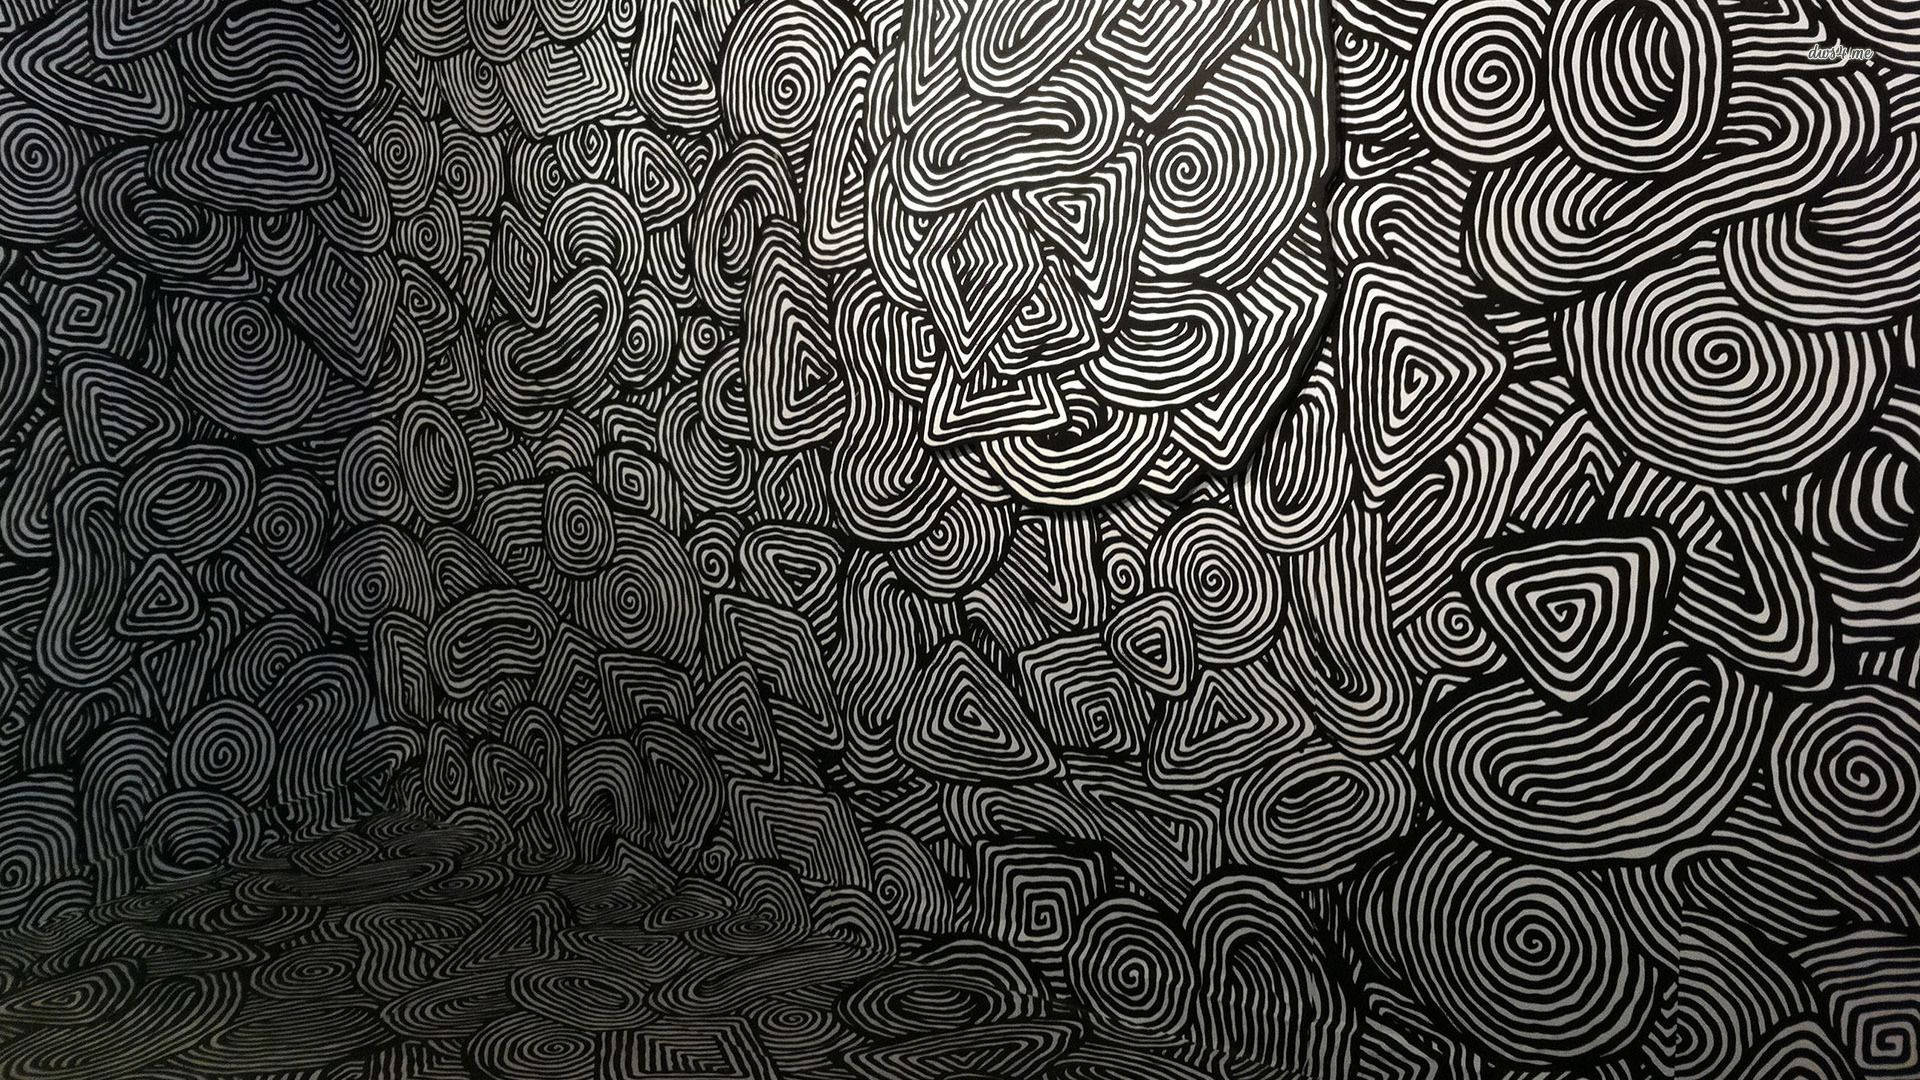 Black and white irregular spiral pattern psychedelic art wallpaper.